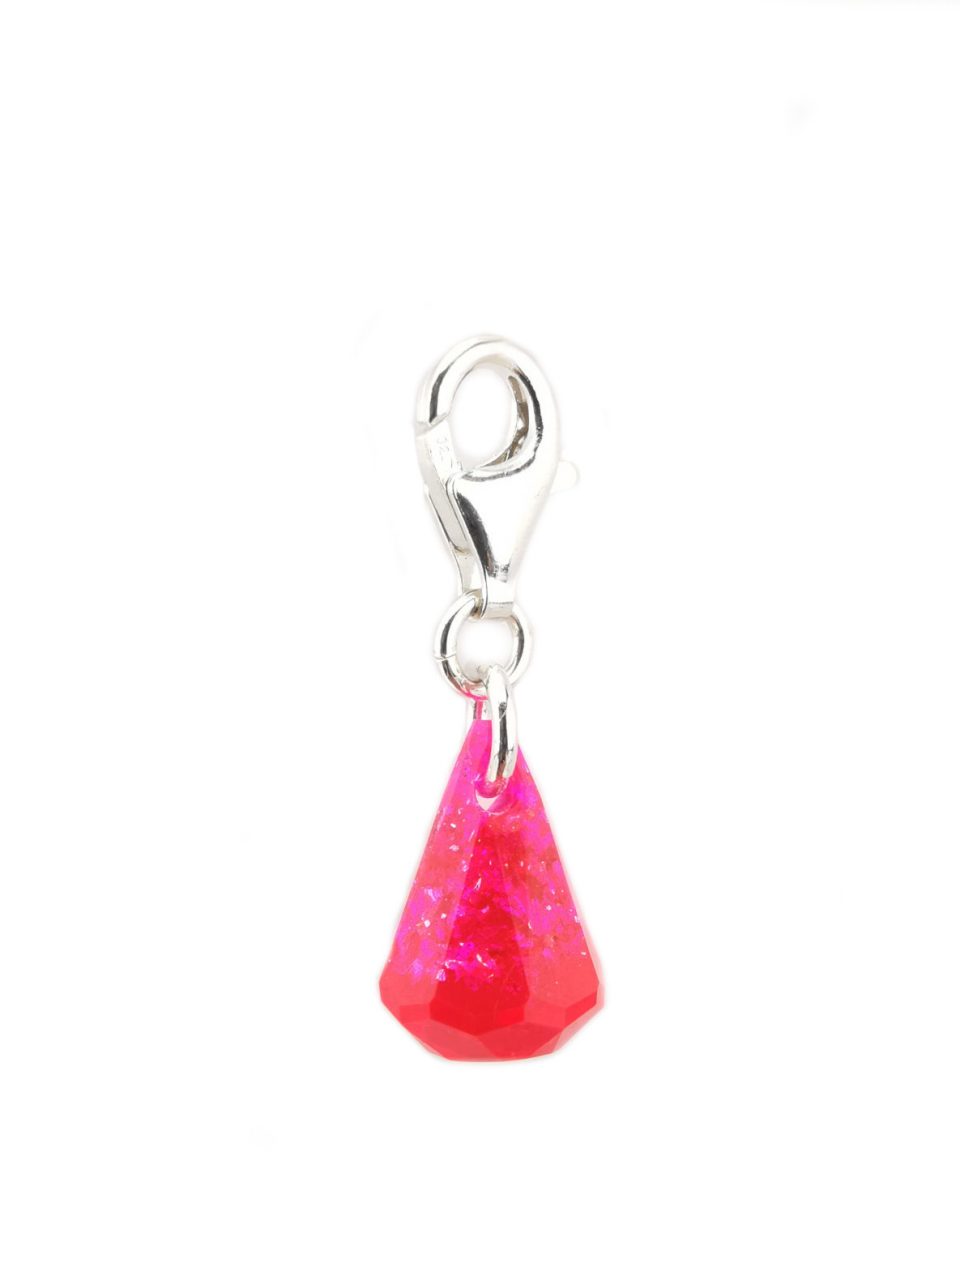 Pink Diamond Orgone Keyring Charm by OrgoneVibes